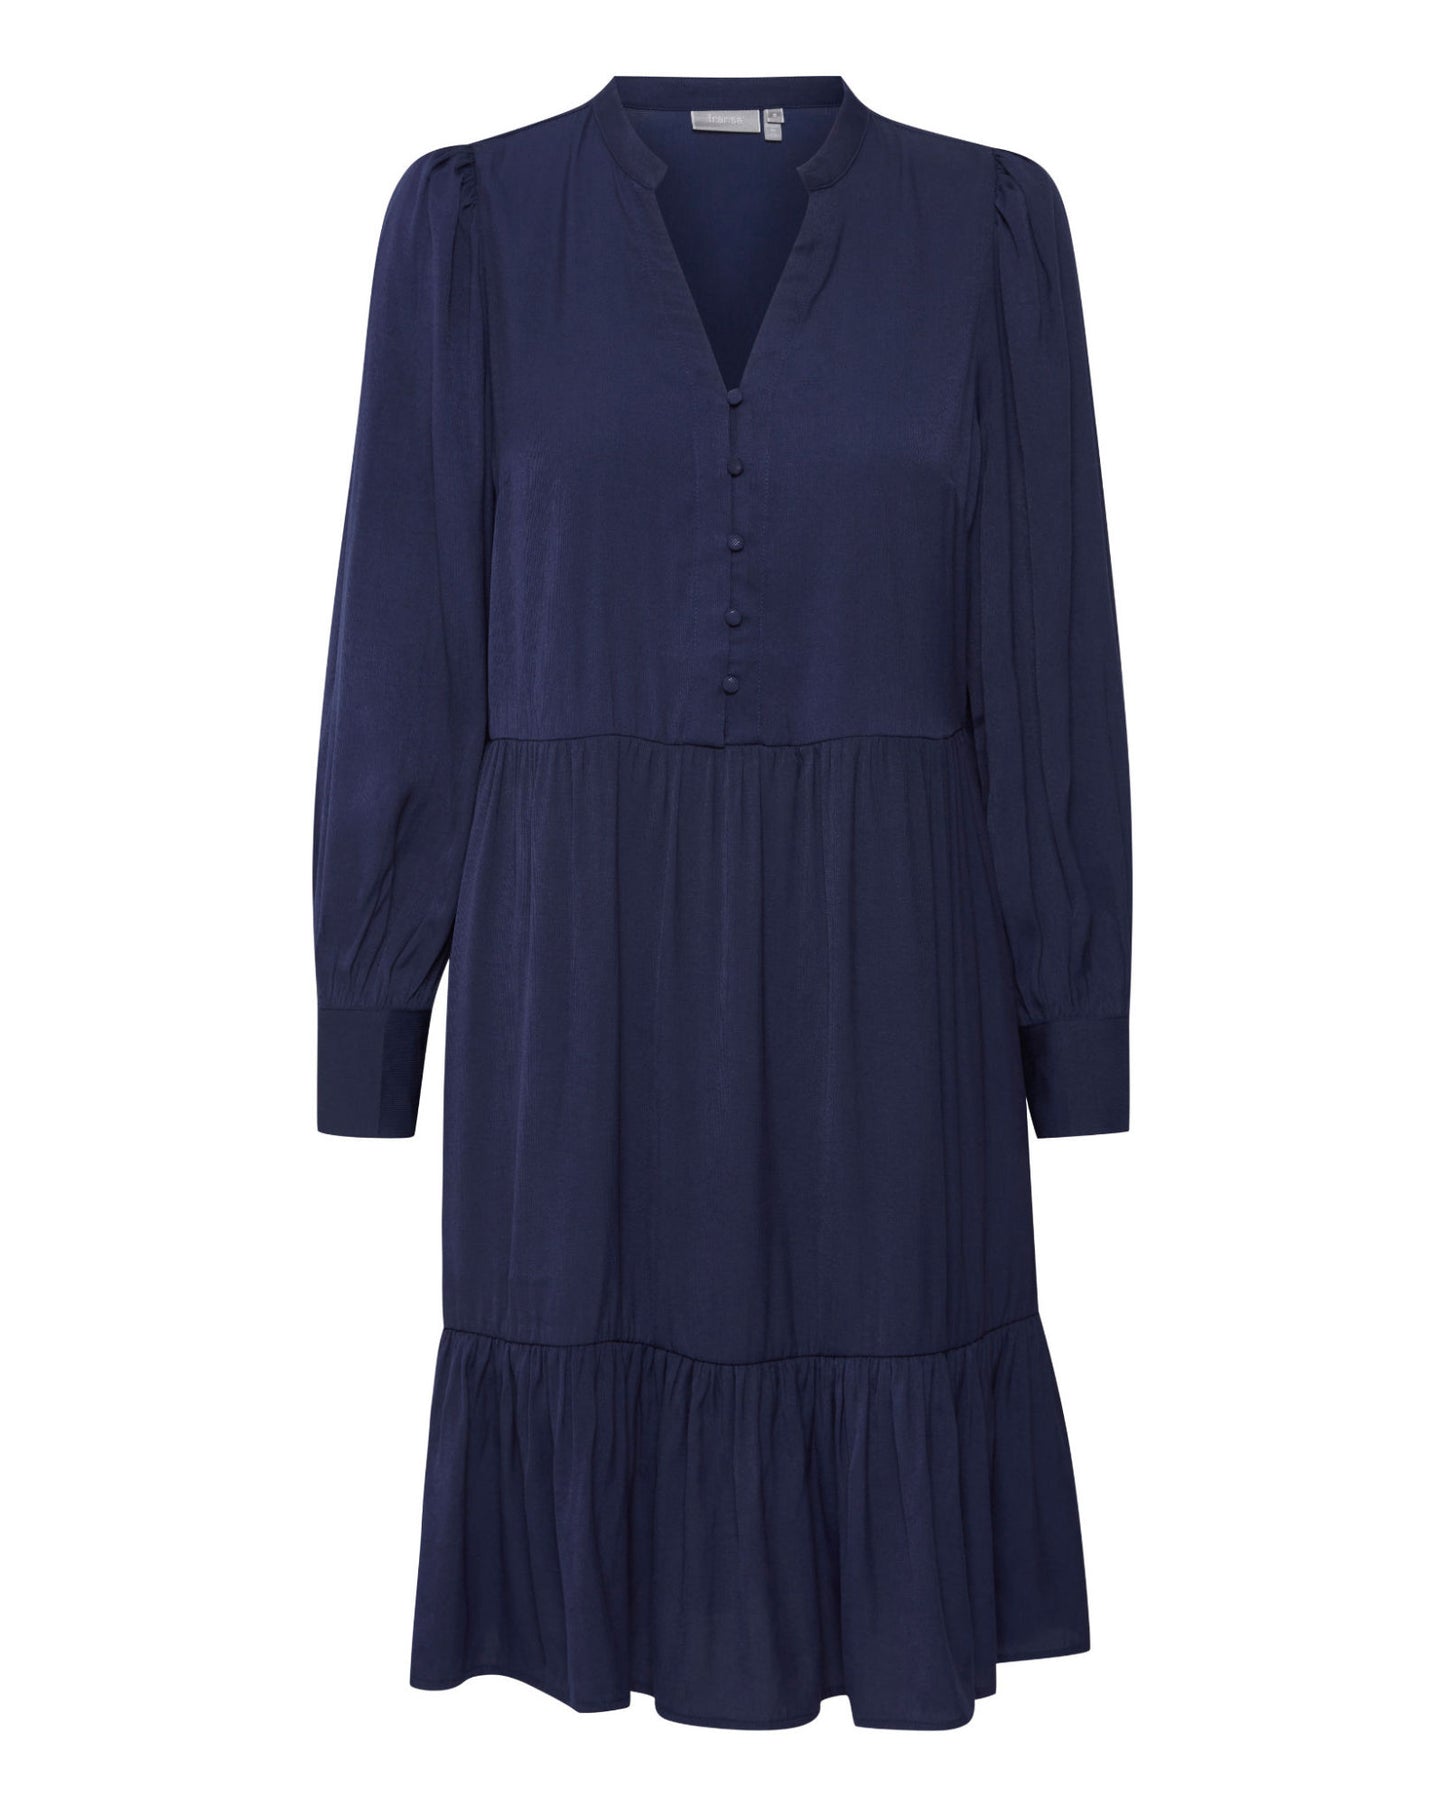 FRSWEET Dress - Medieval Blue